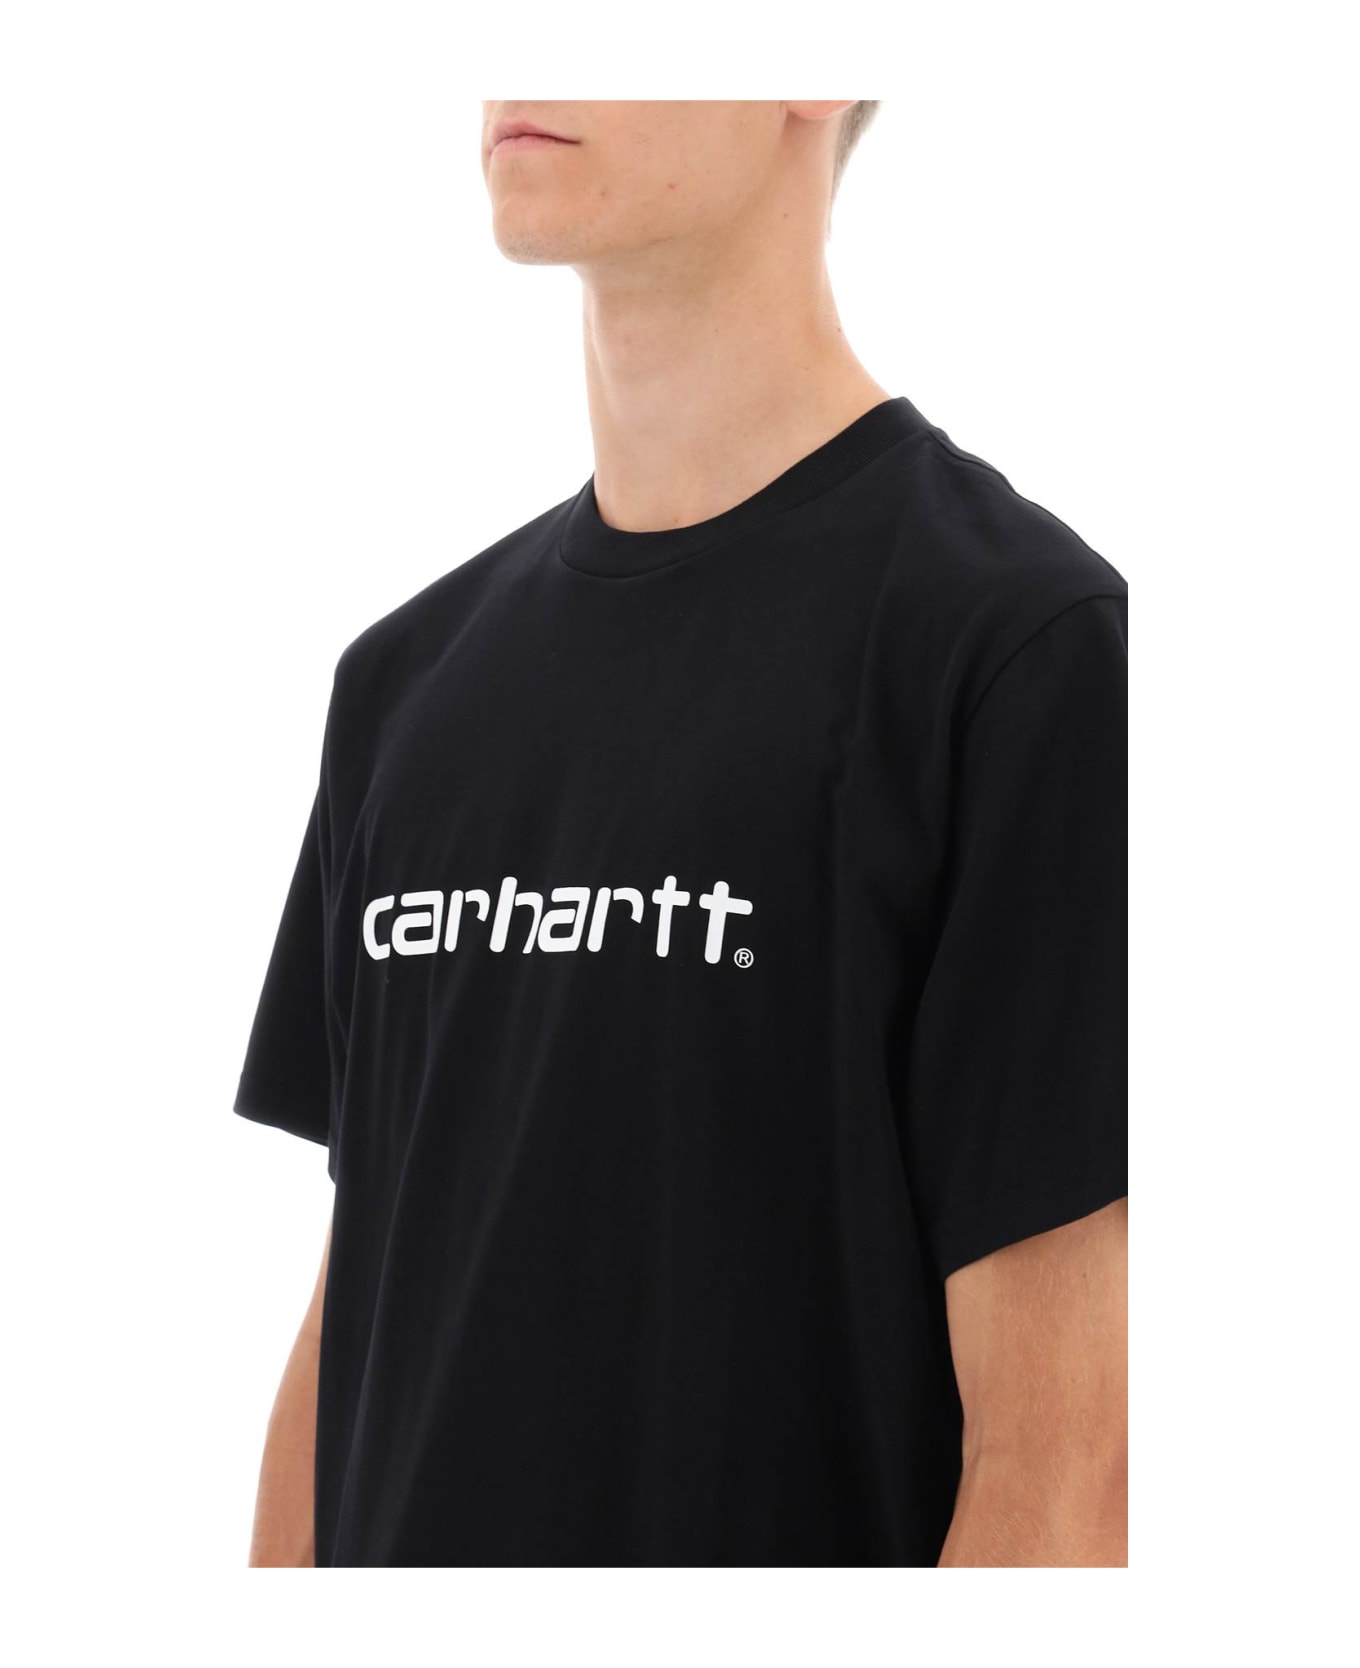 Carhartt Script T-shirt - BLACK WHITE (Black)